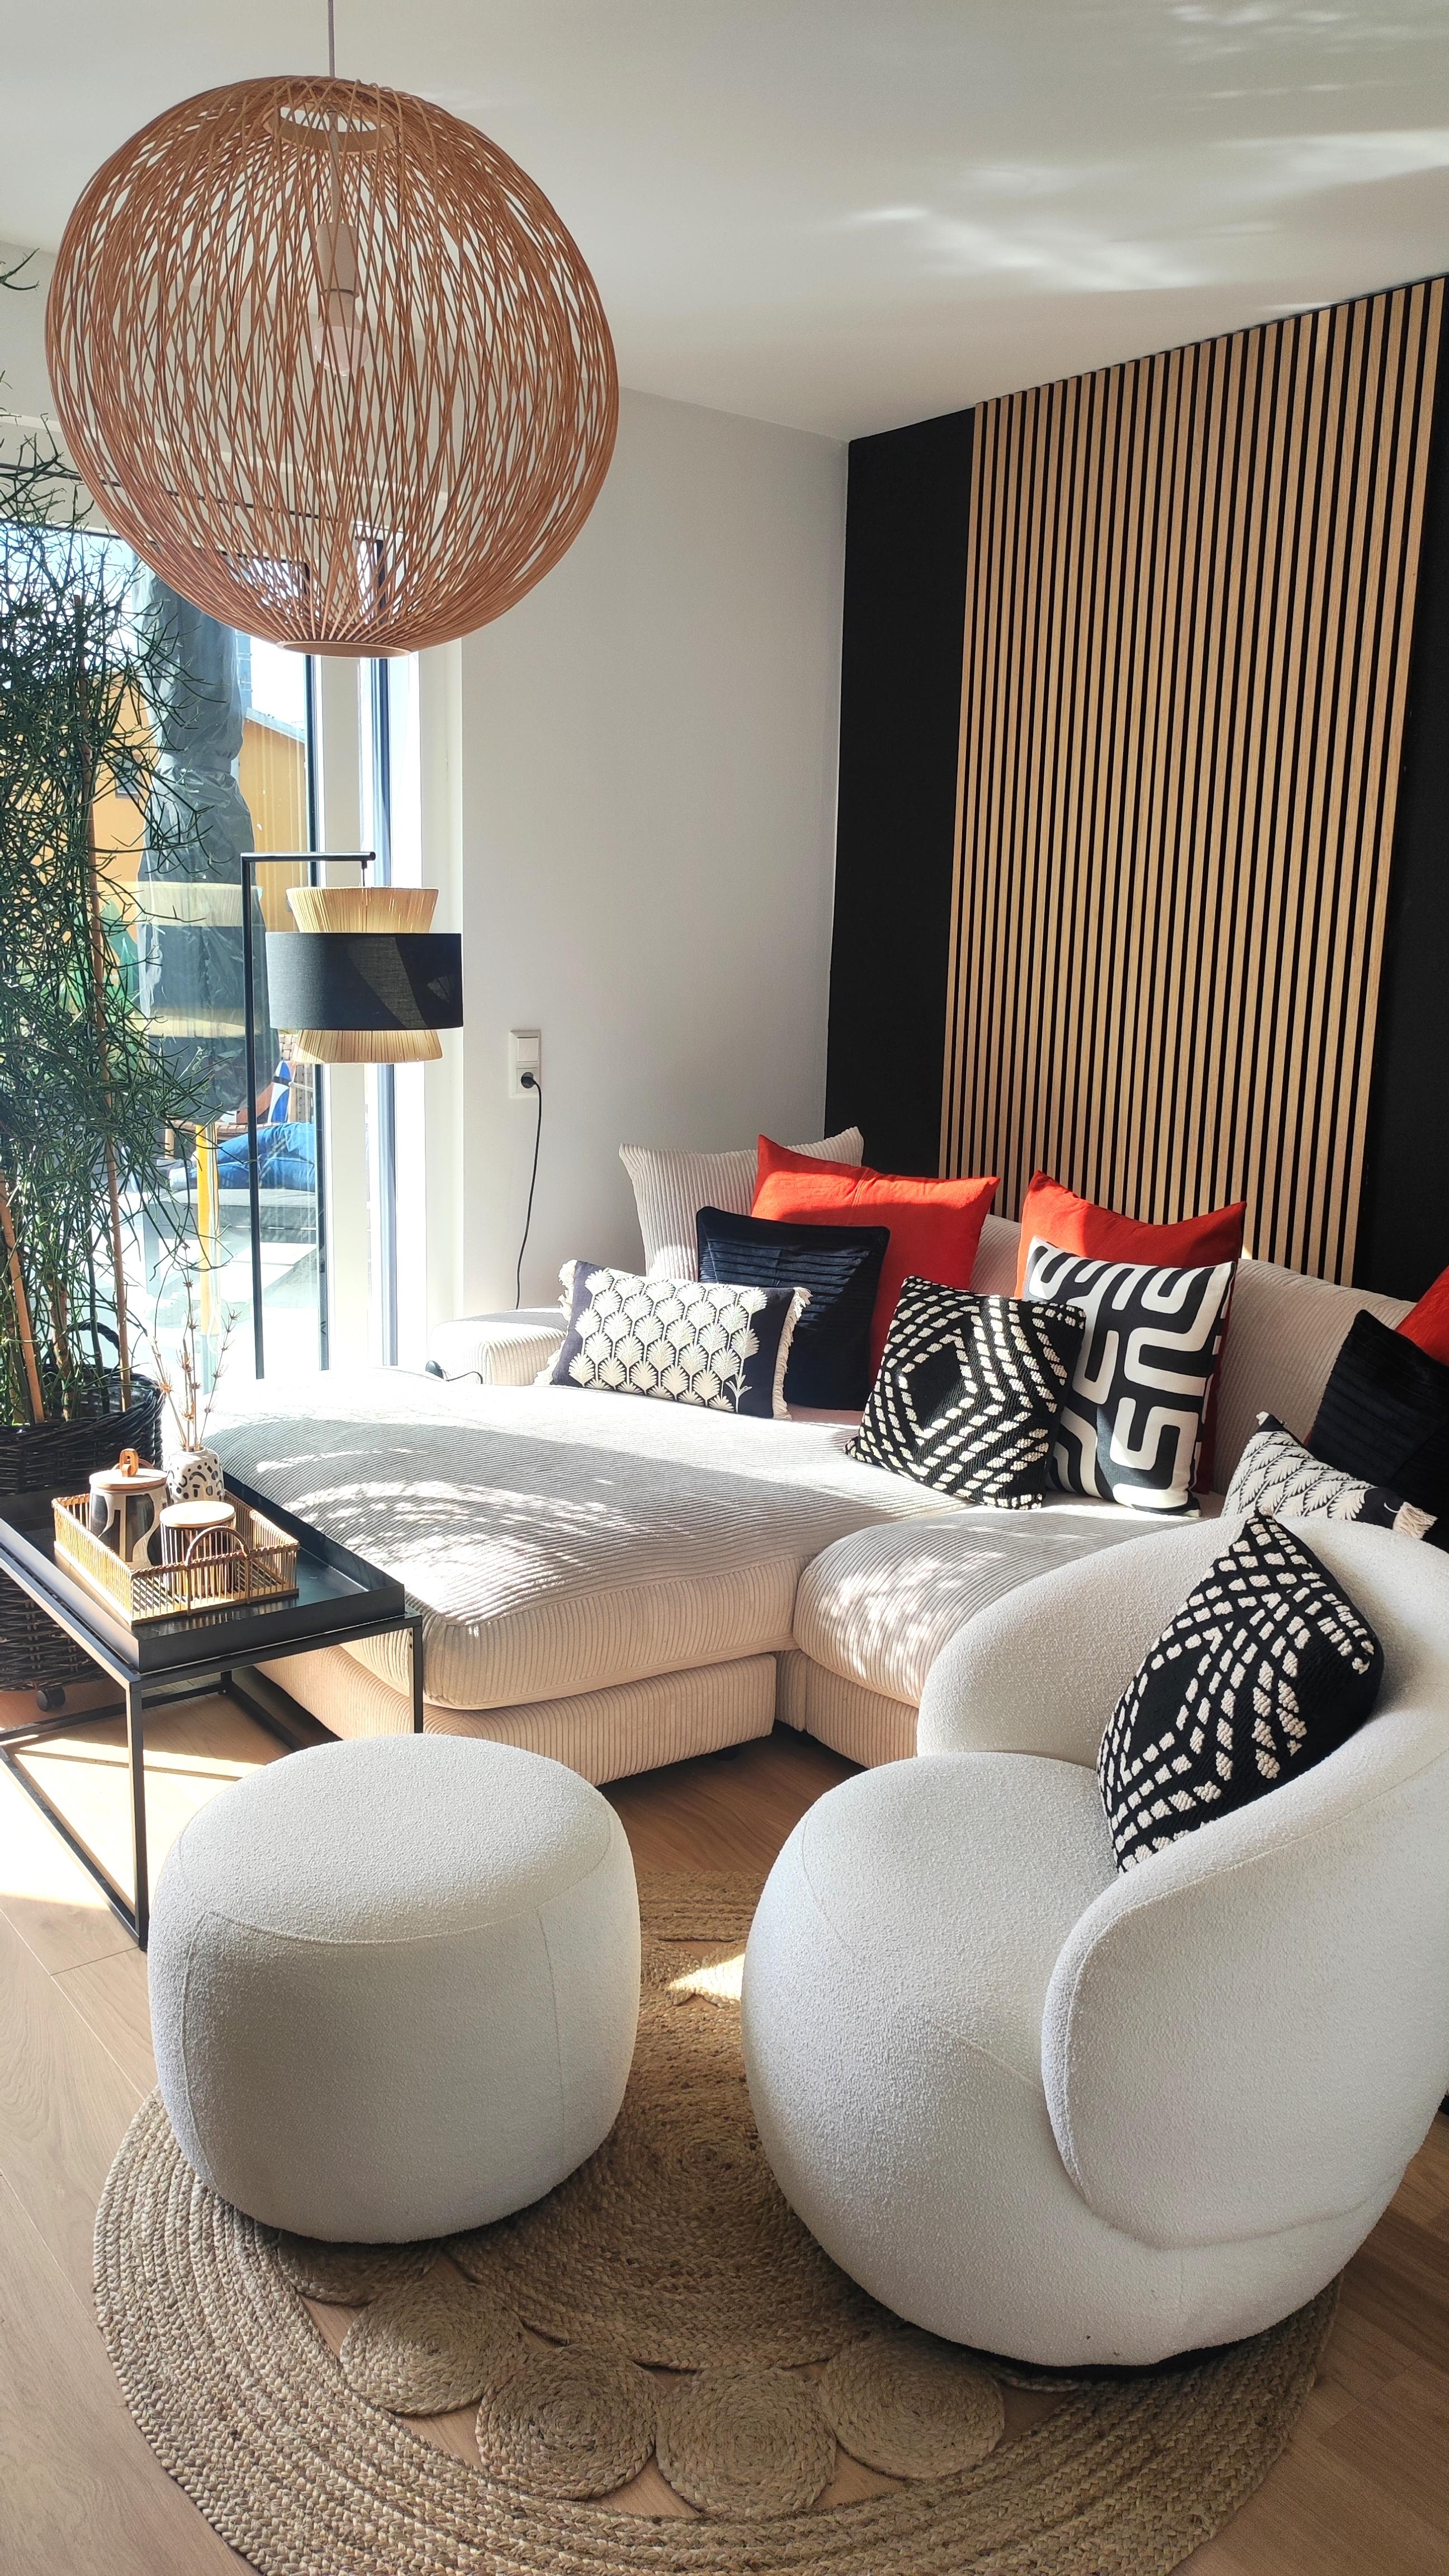 #livingroom #living #interior #interiordesign #decor #decoration #white #sofa #couchliebt #couching #home #style #room